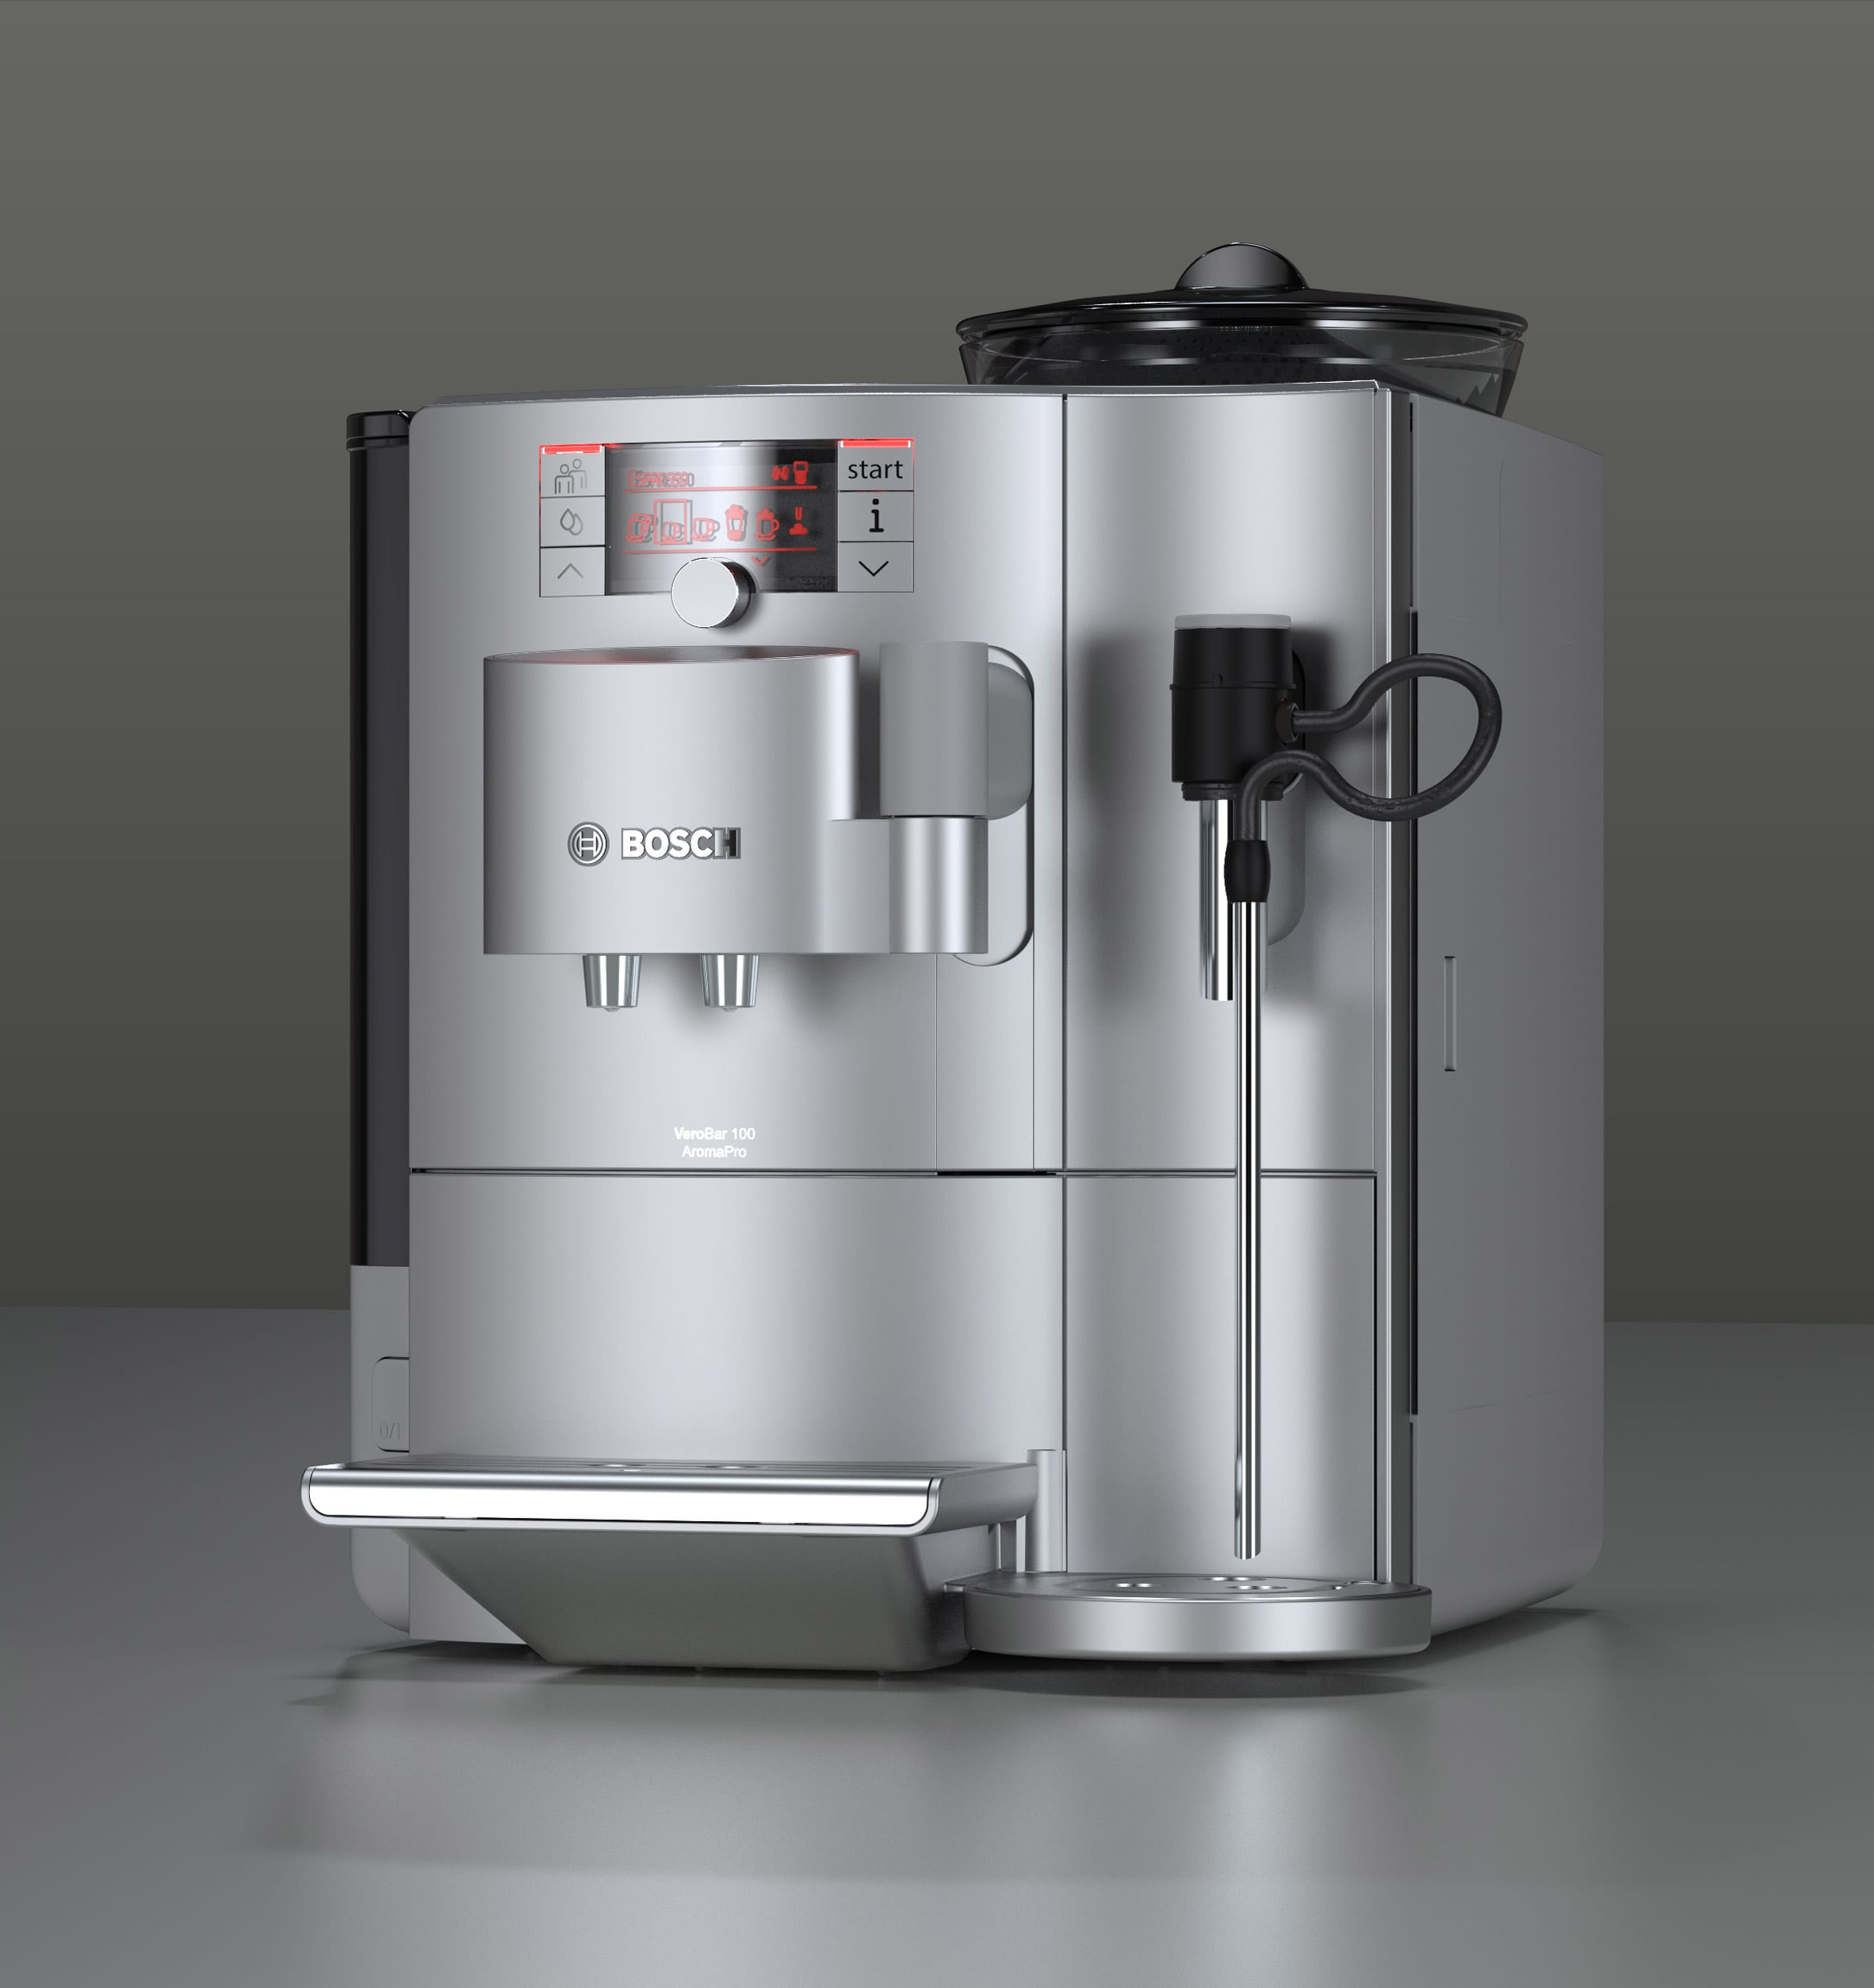 A render of a silver coffee machine